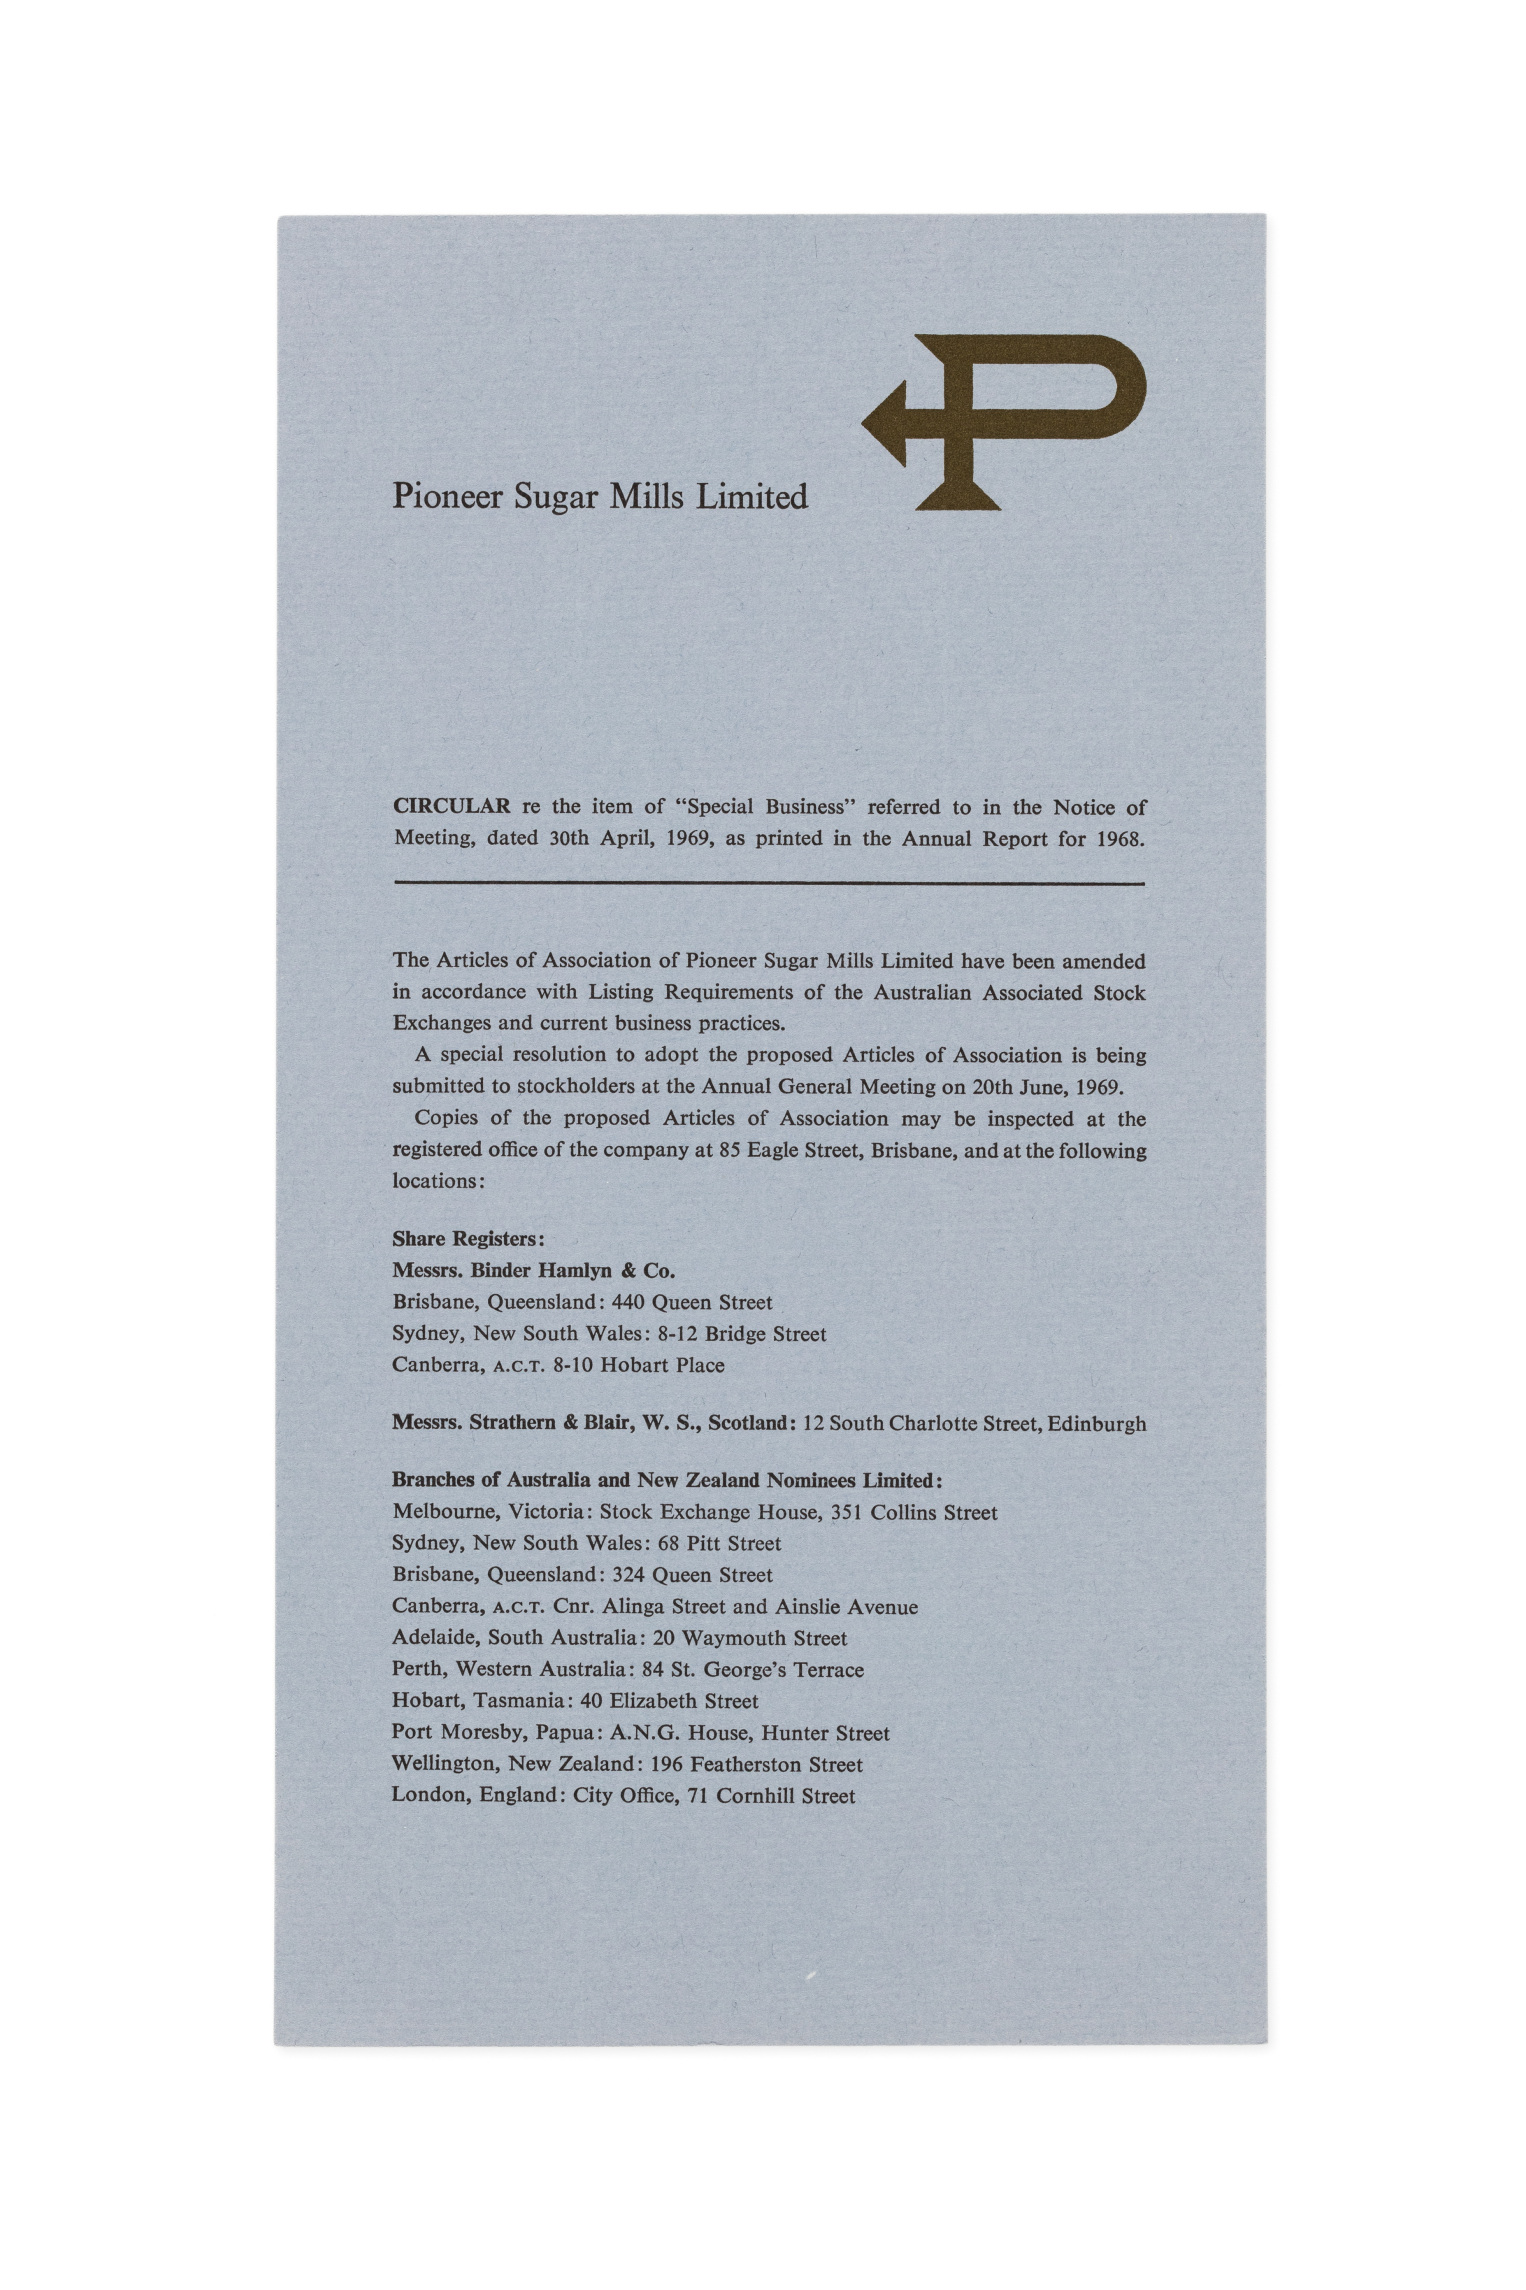 Pioneer Sugar Mills annual report insert designed by Alistair Morrison